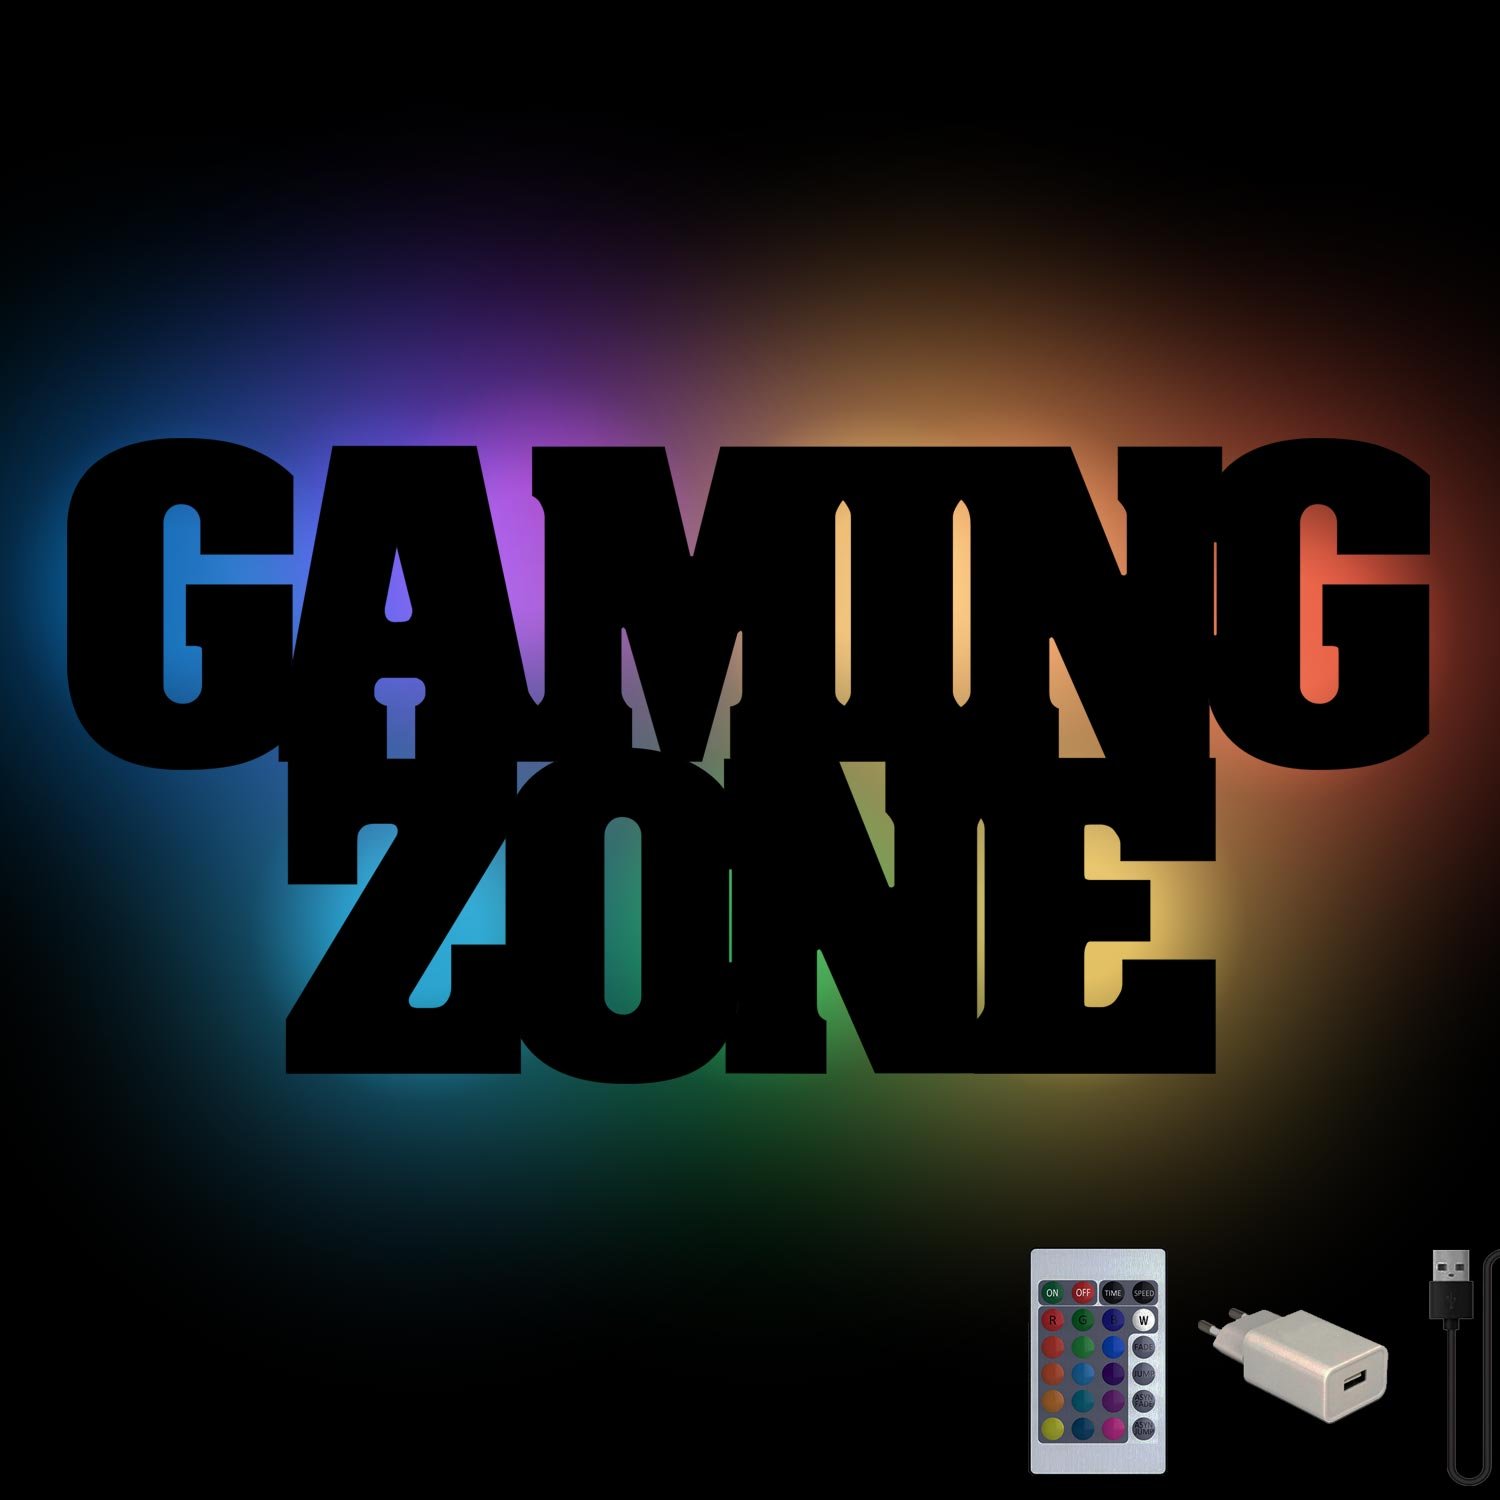 Farbwechsel LED Gaming Zone - Wanddeko